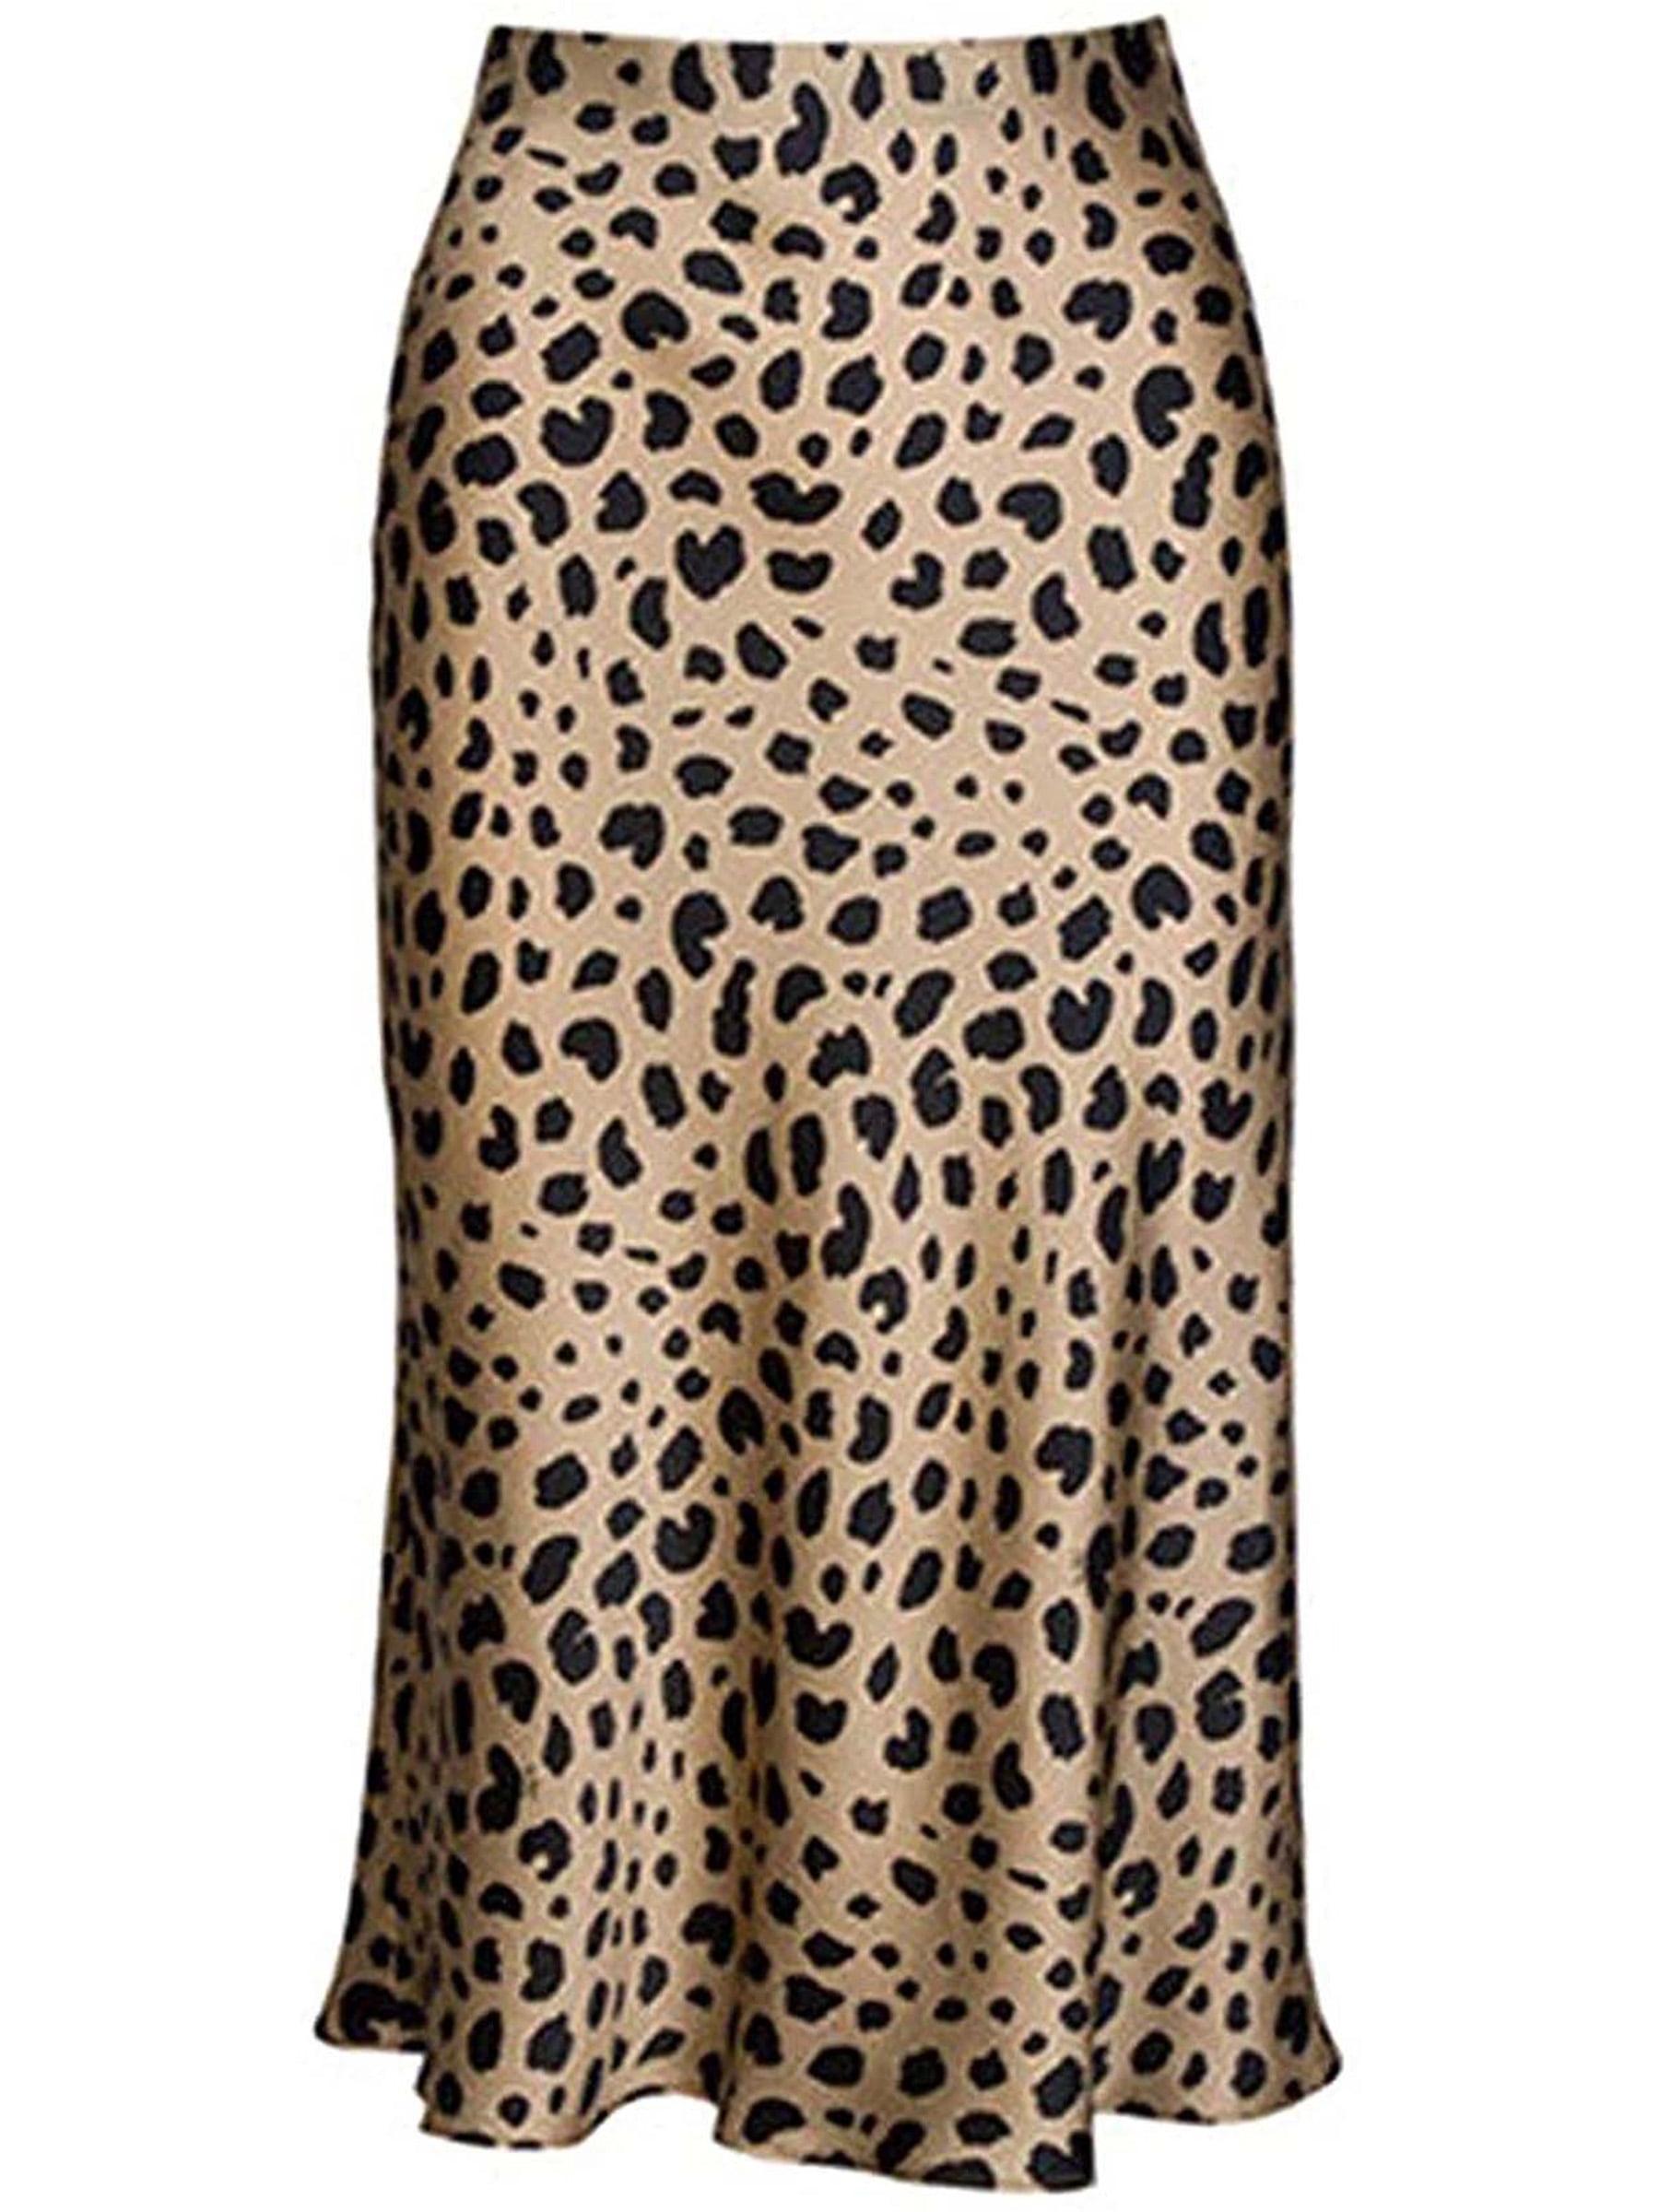 Keasmto Leopard Print Skirt for Women Midi Length Cheetah High Waist ...